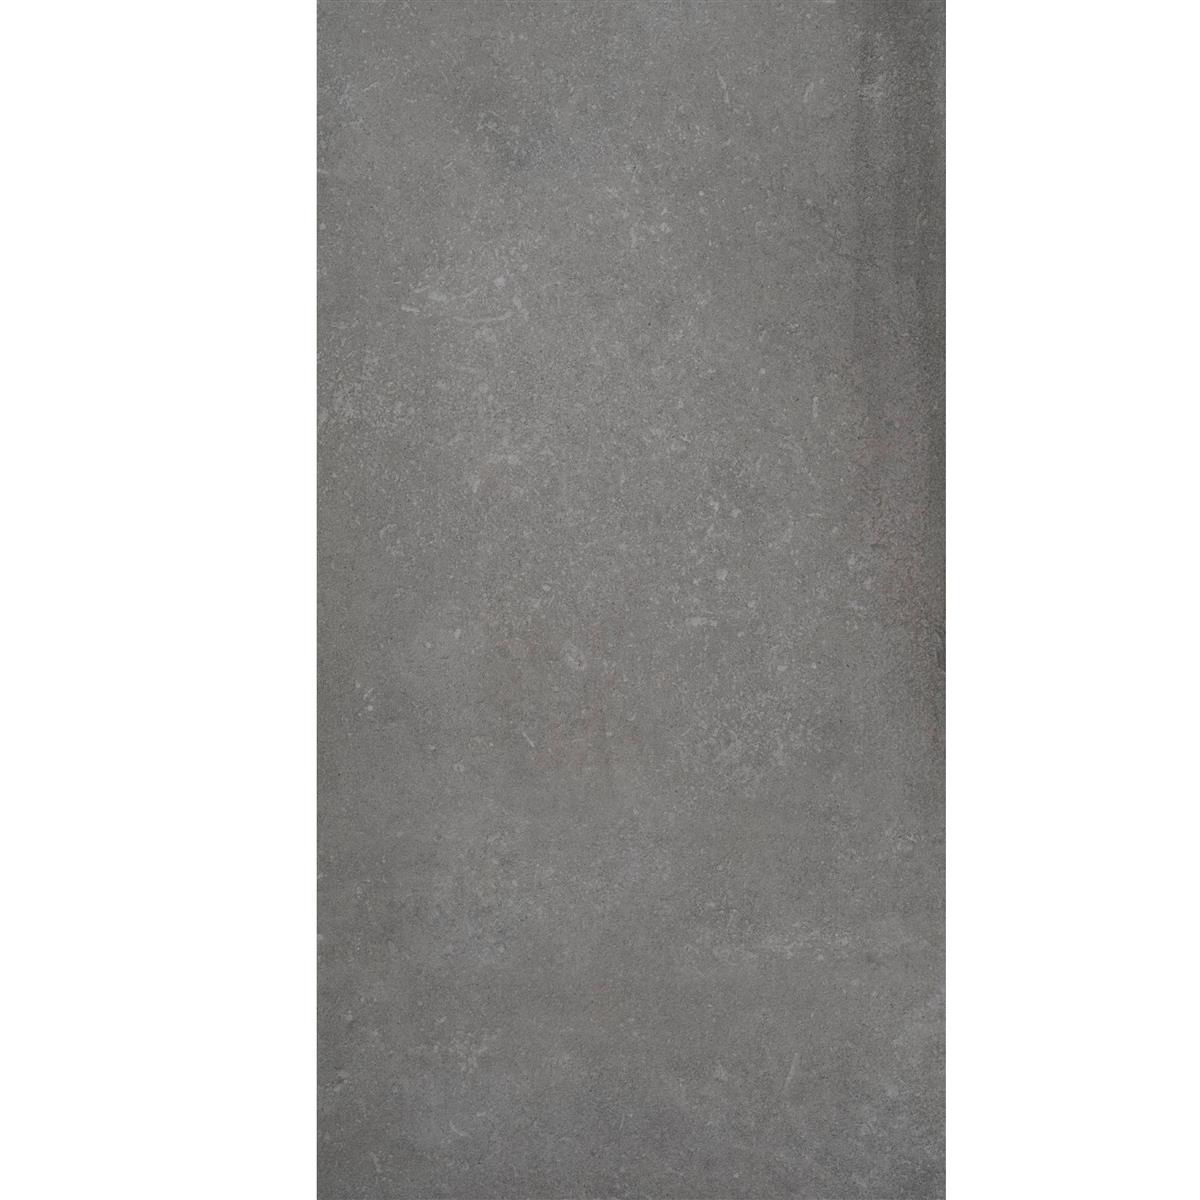 Terrassenplatten Nürnberg Grau 40x80x2cm